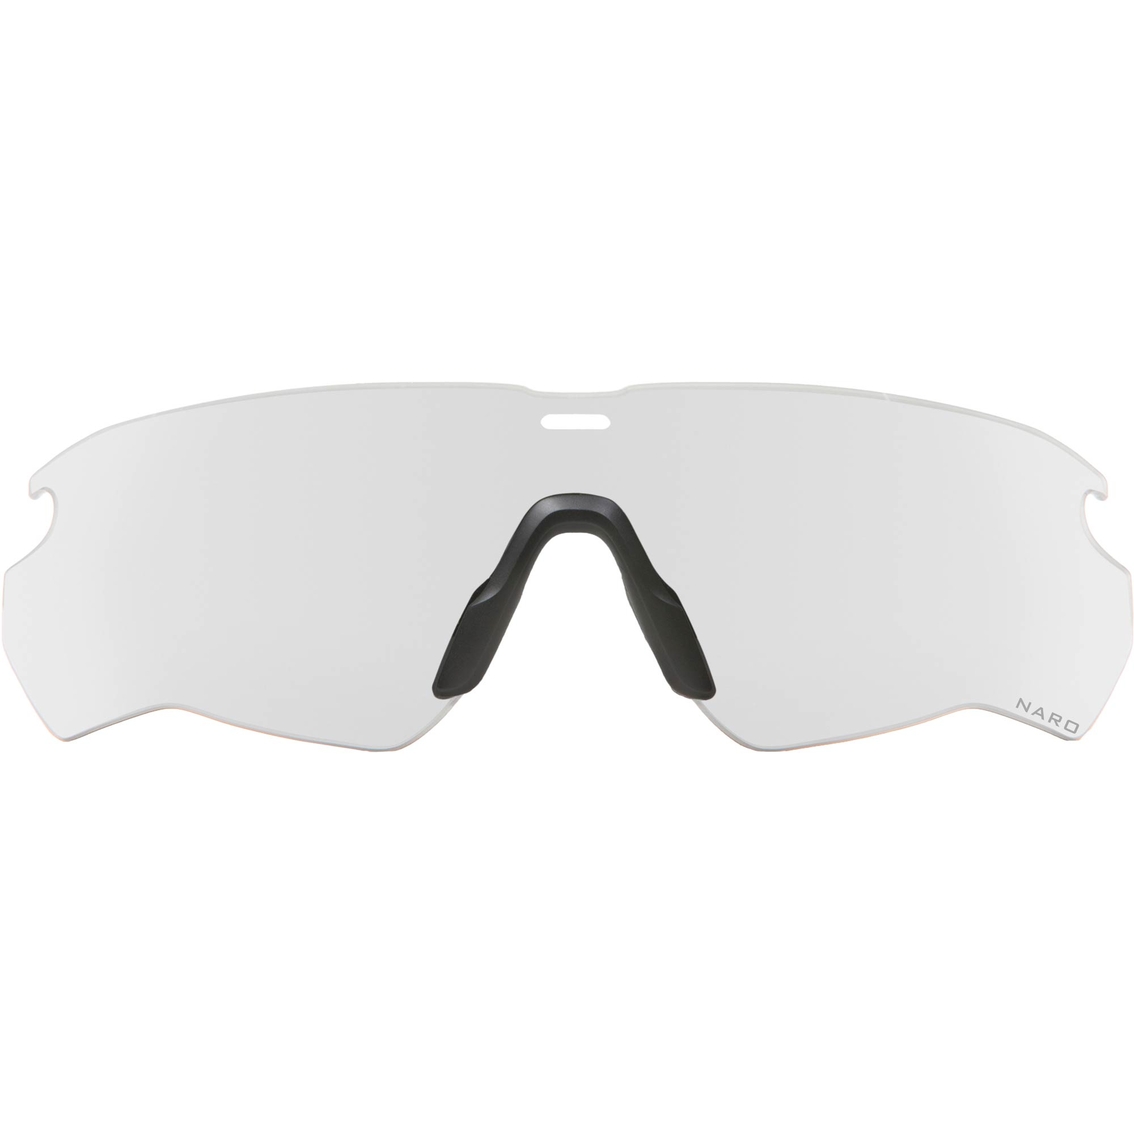 ESS Crossblade Eyeshield 2 pk. - Image 3 of 4